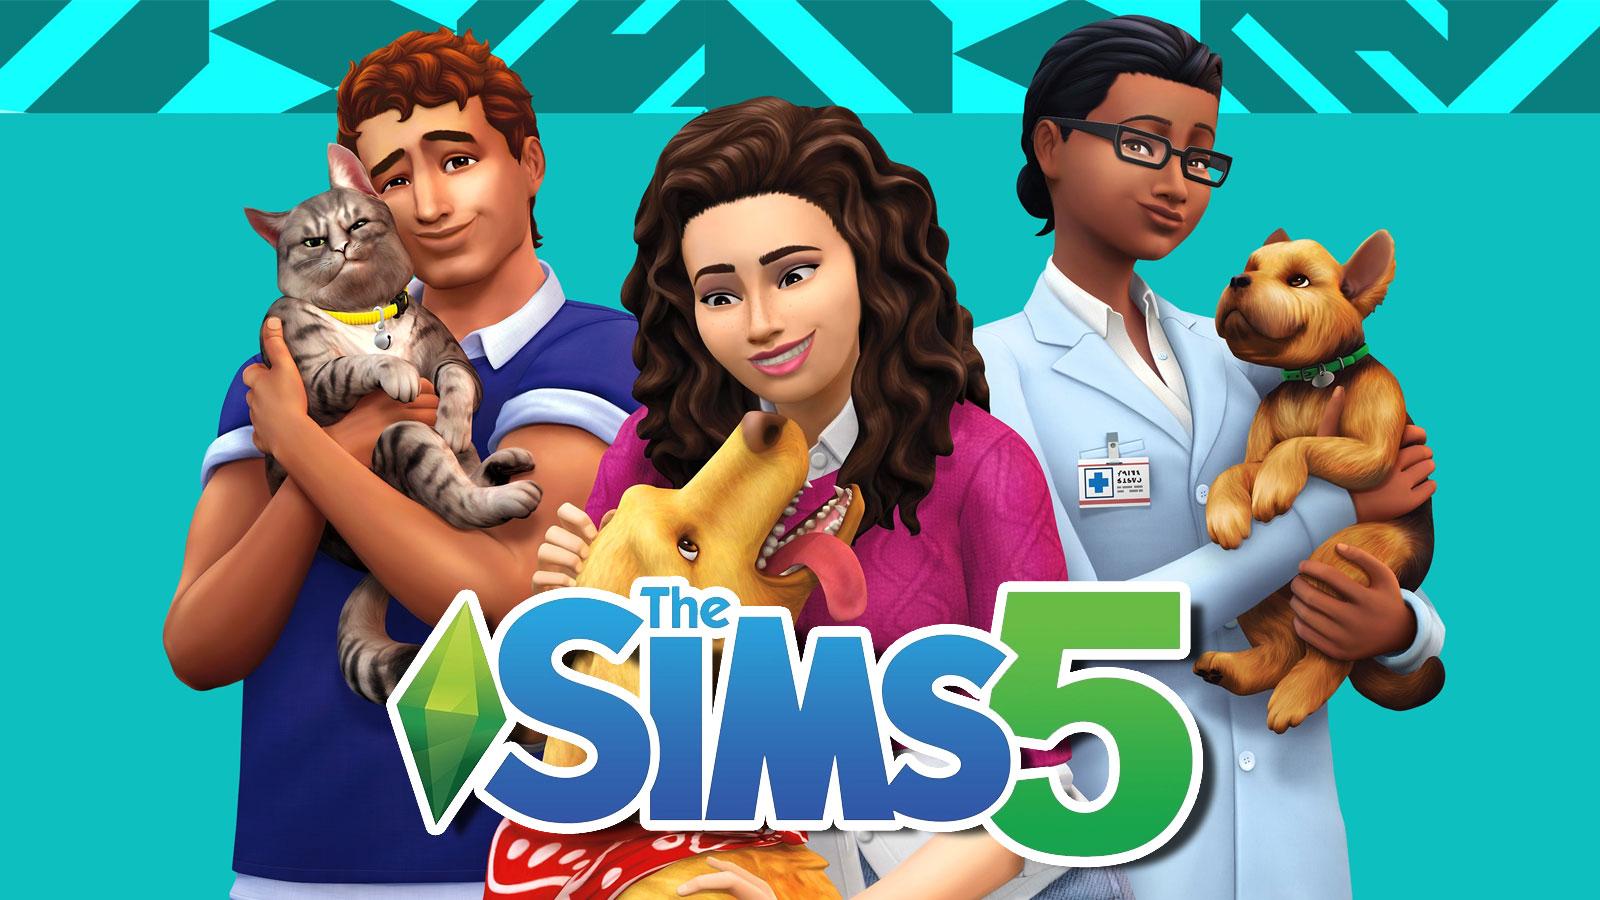 Sims 5 reveal header